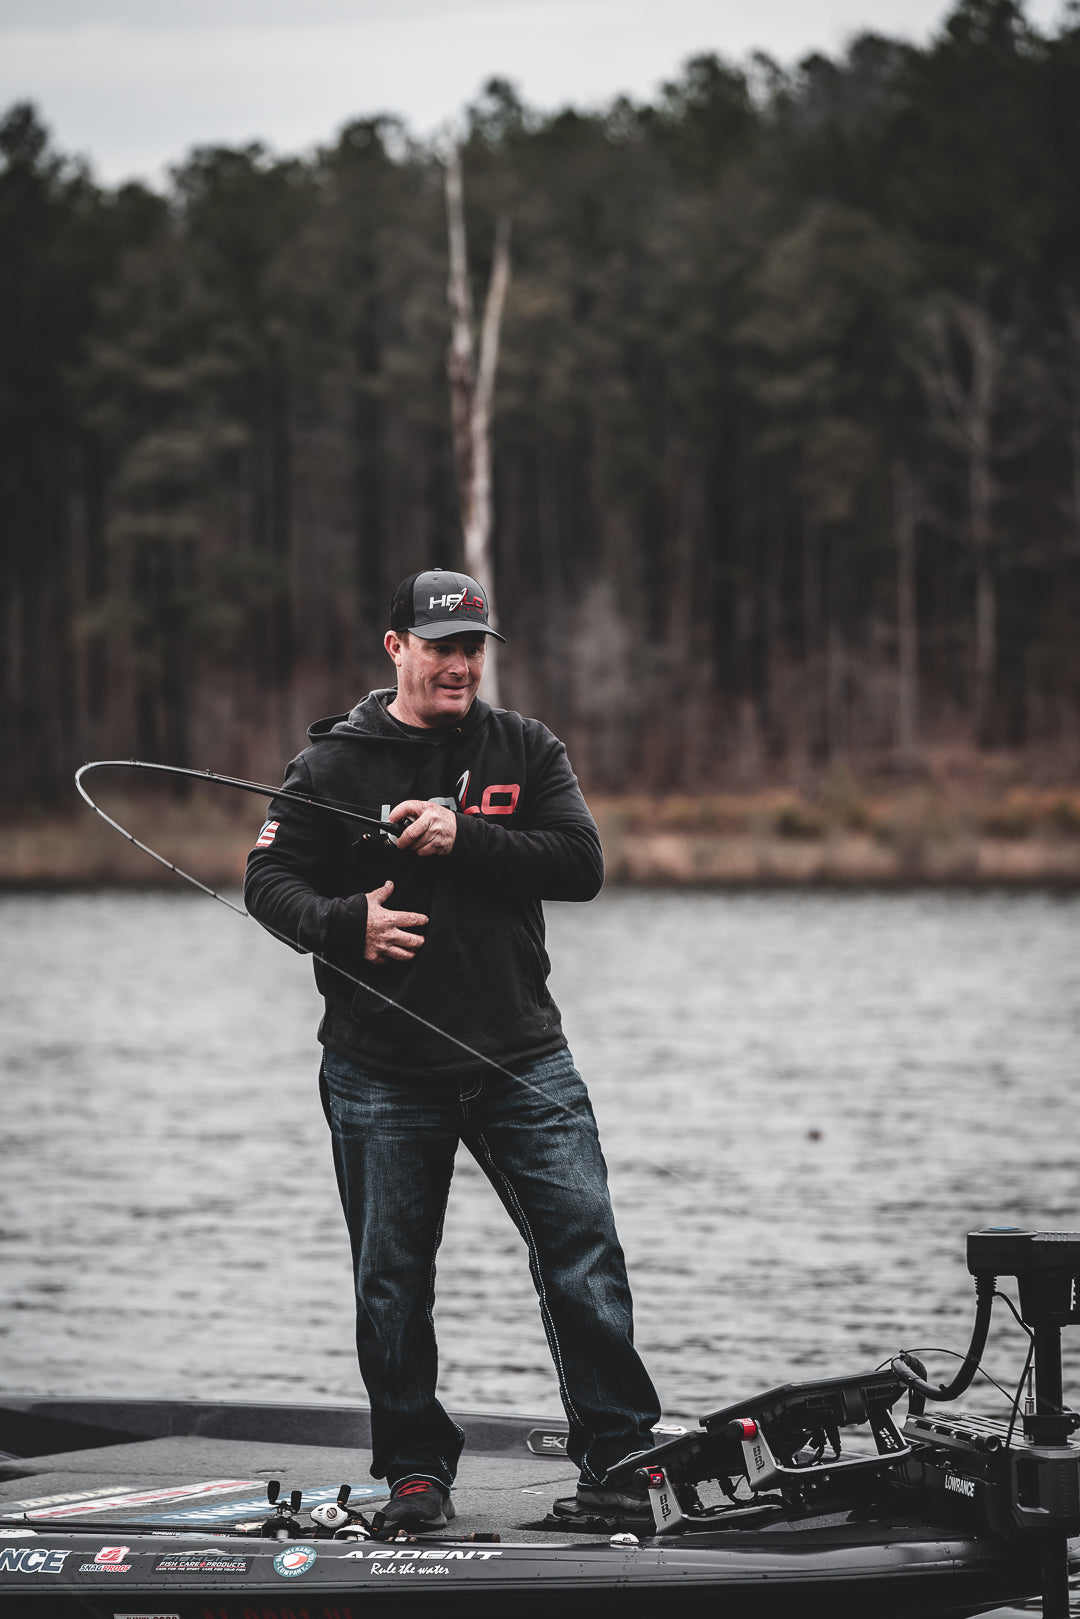 Halo Fishing Kyrptonite Series Rods with Scott Canterbury